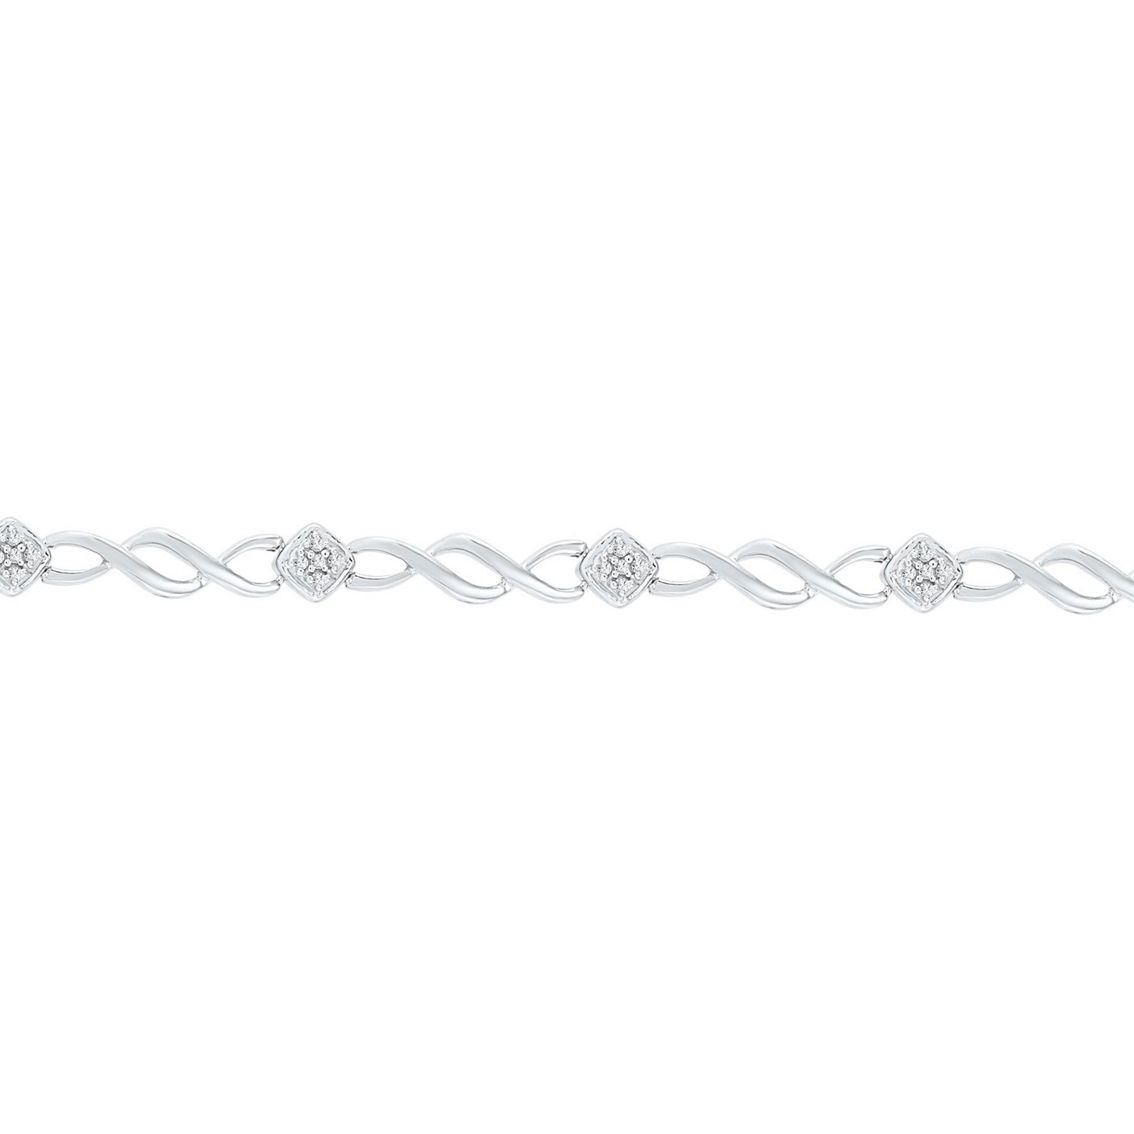 10K White Gold 1/6 CTW Diamond Bracelet - Image 2 of 2